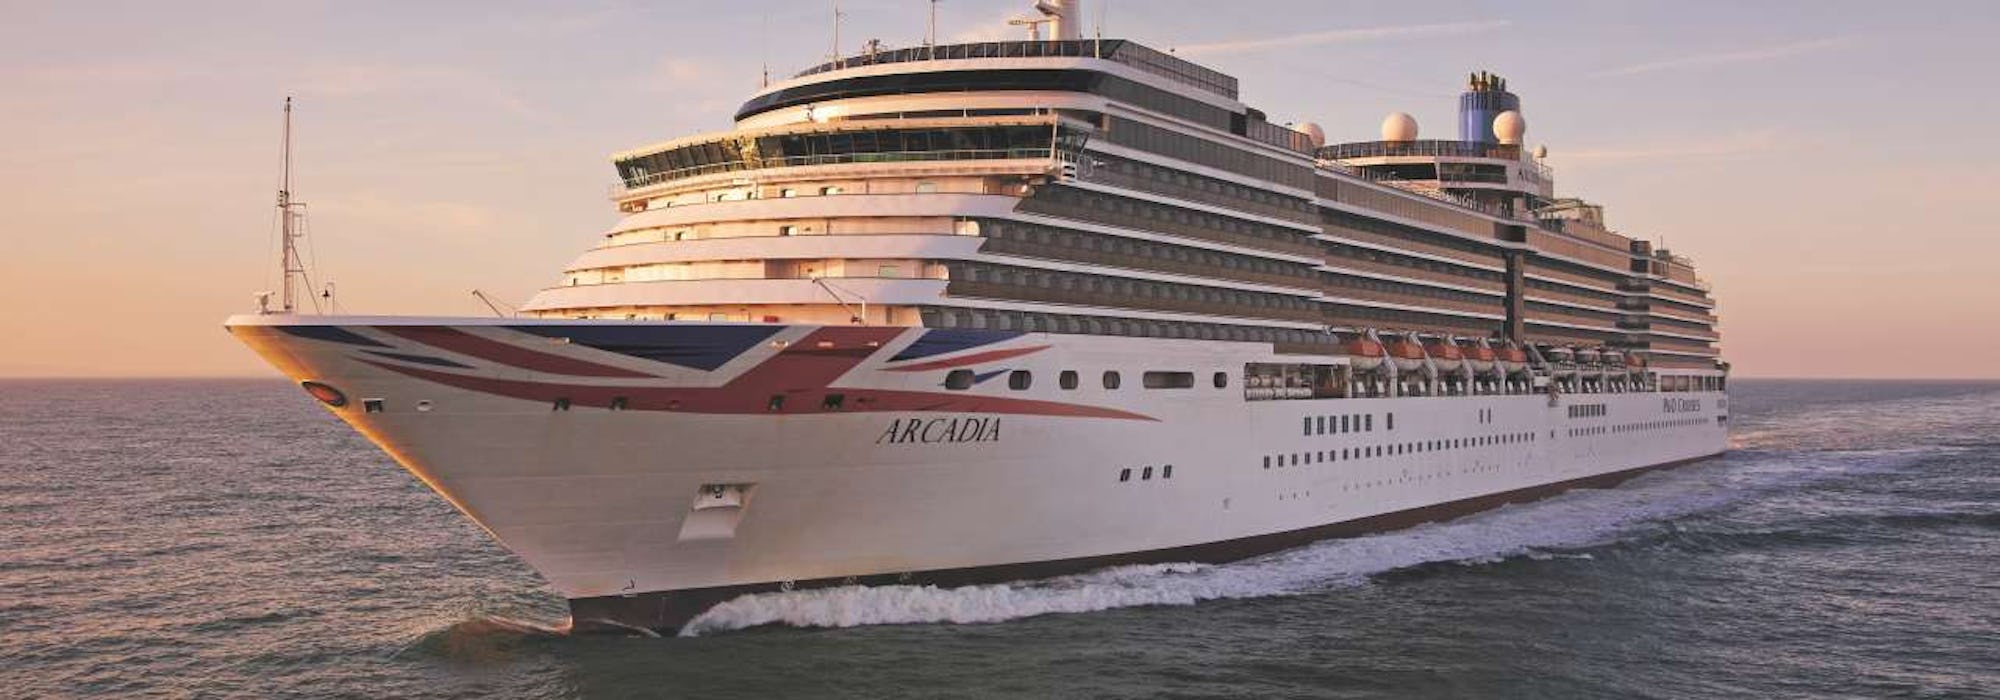 P&O Cruises - Arcadia